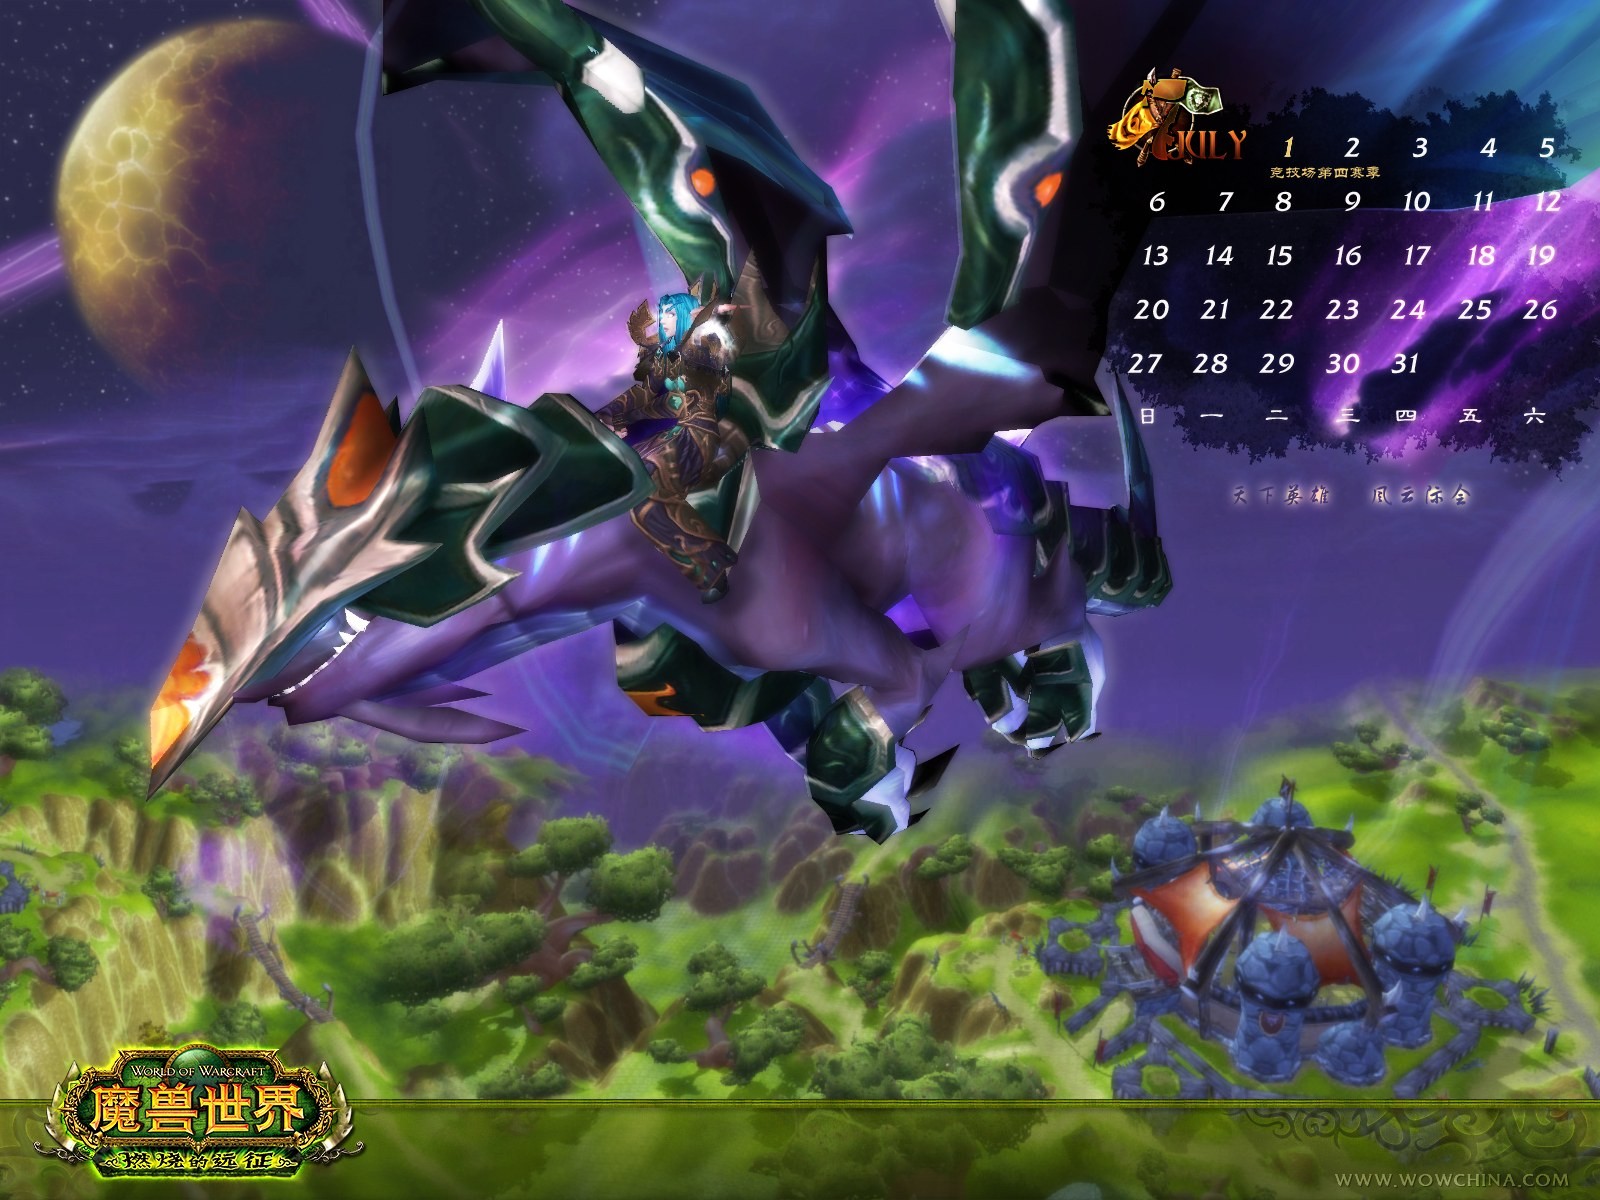 World of Warcraft: fondo de pantalla oficial de The Burning Crusade (2) #25 - 1600x1200